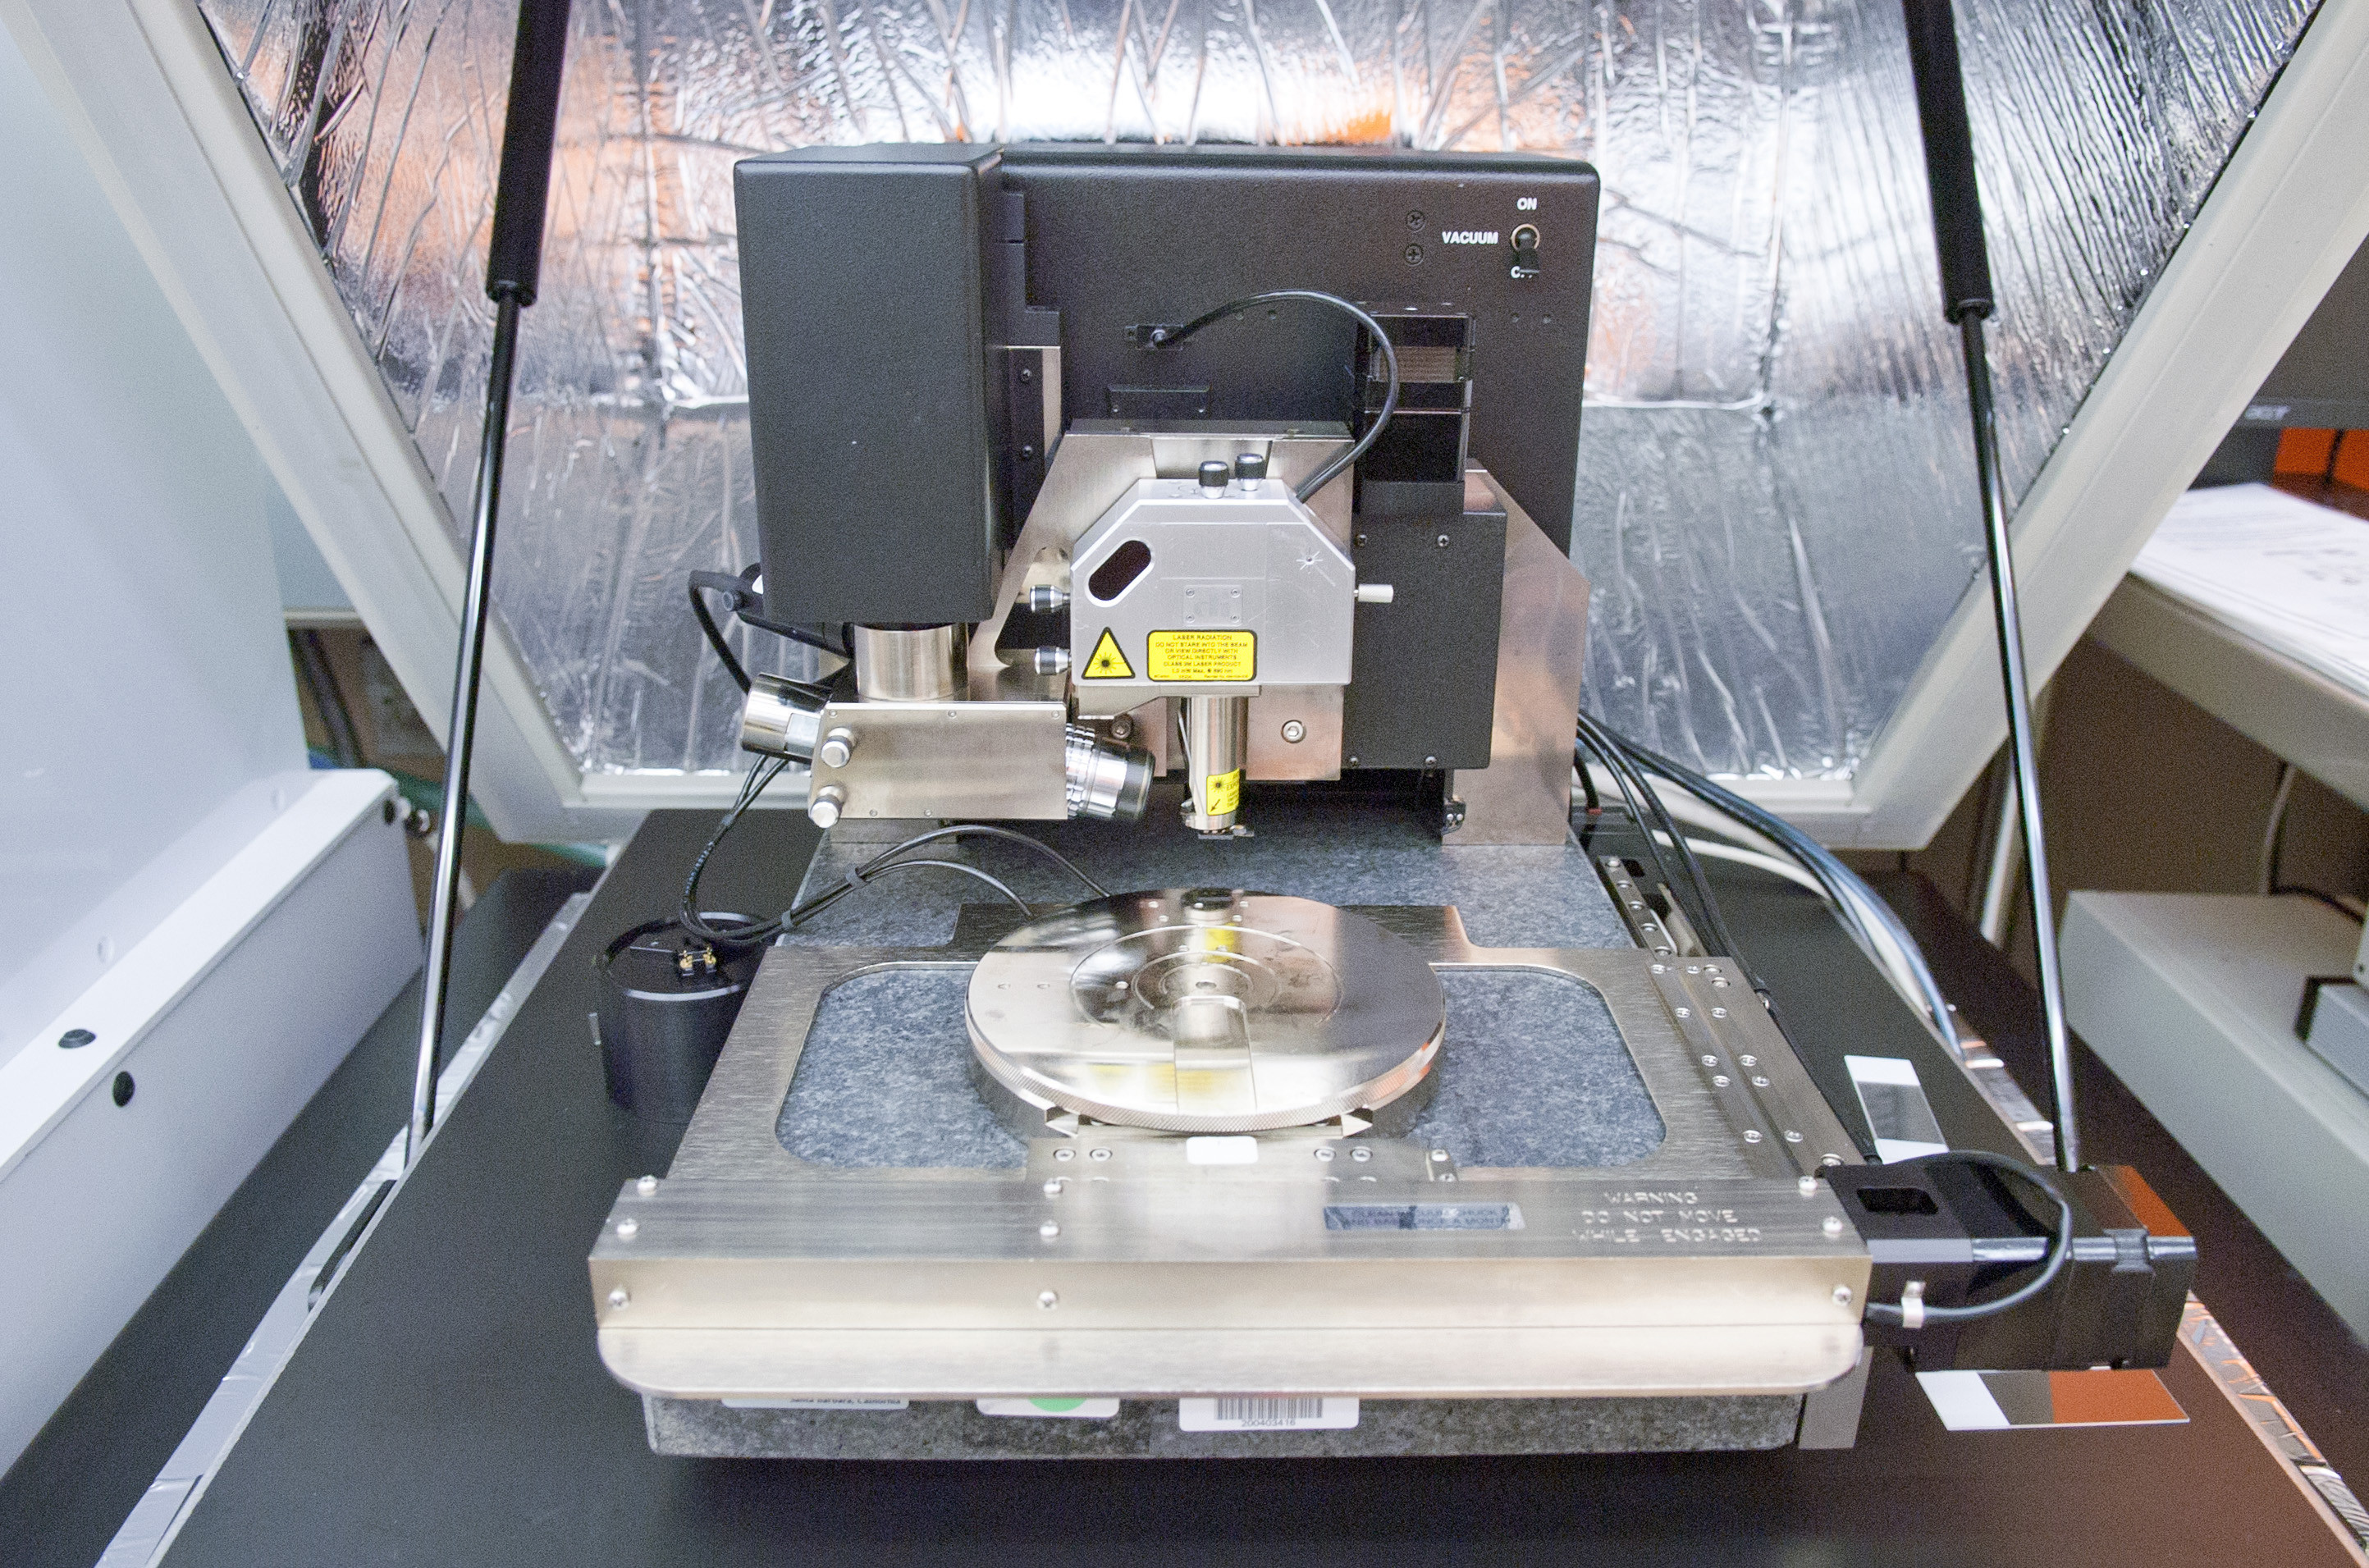 The Keller Atomic Force Microscope